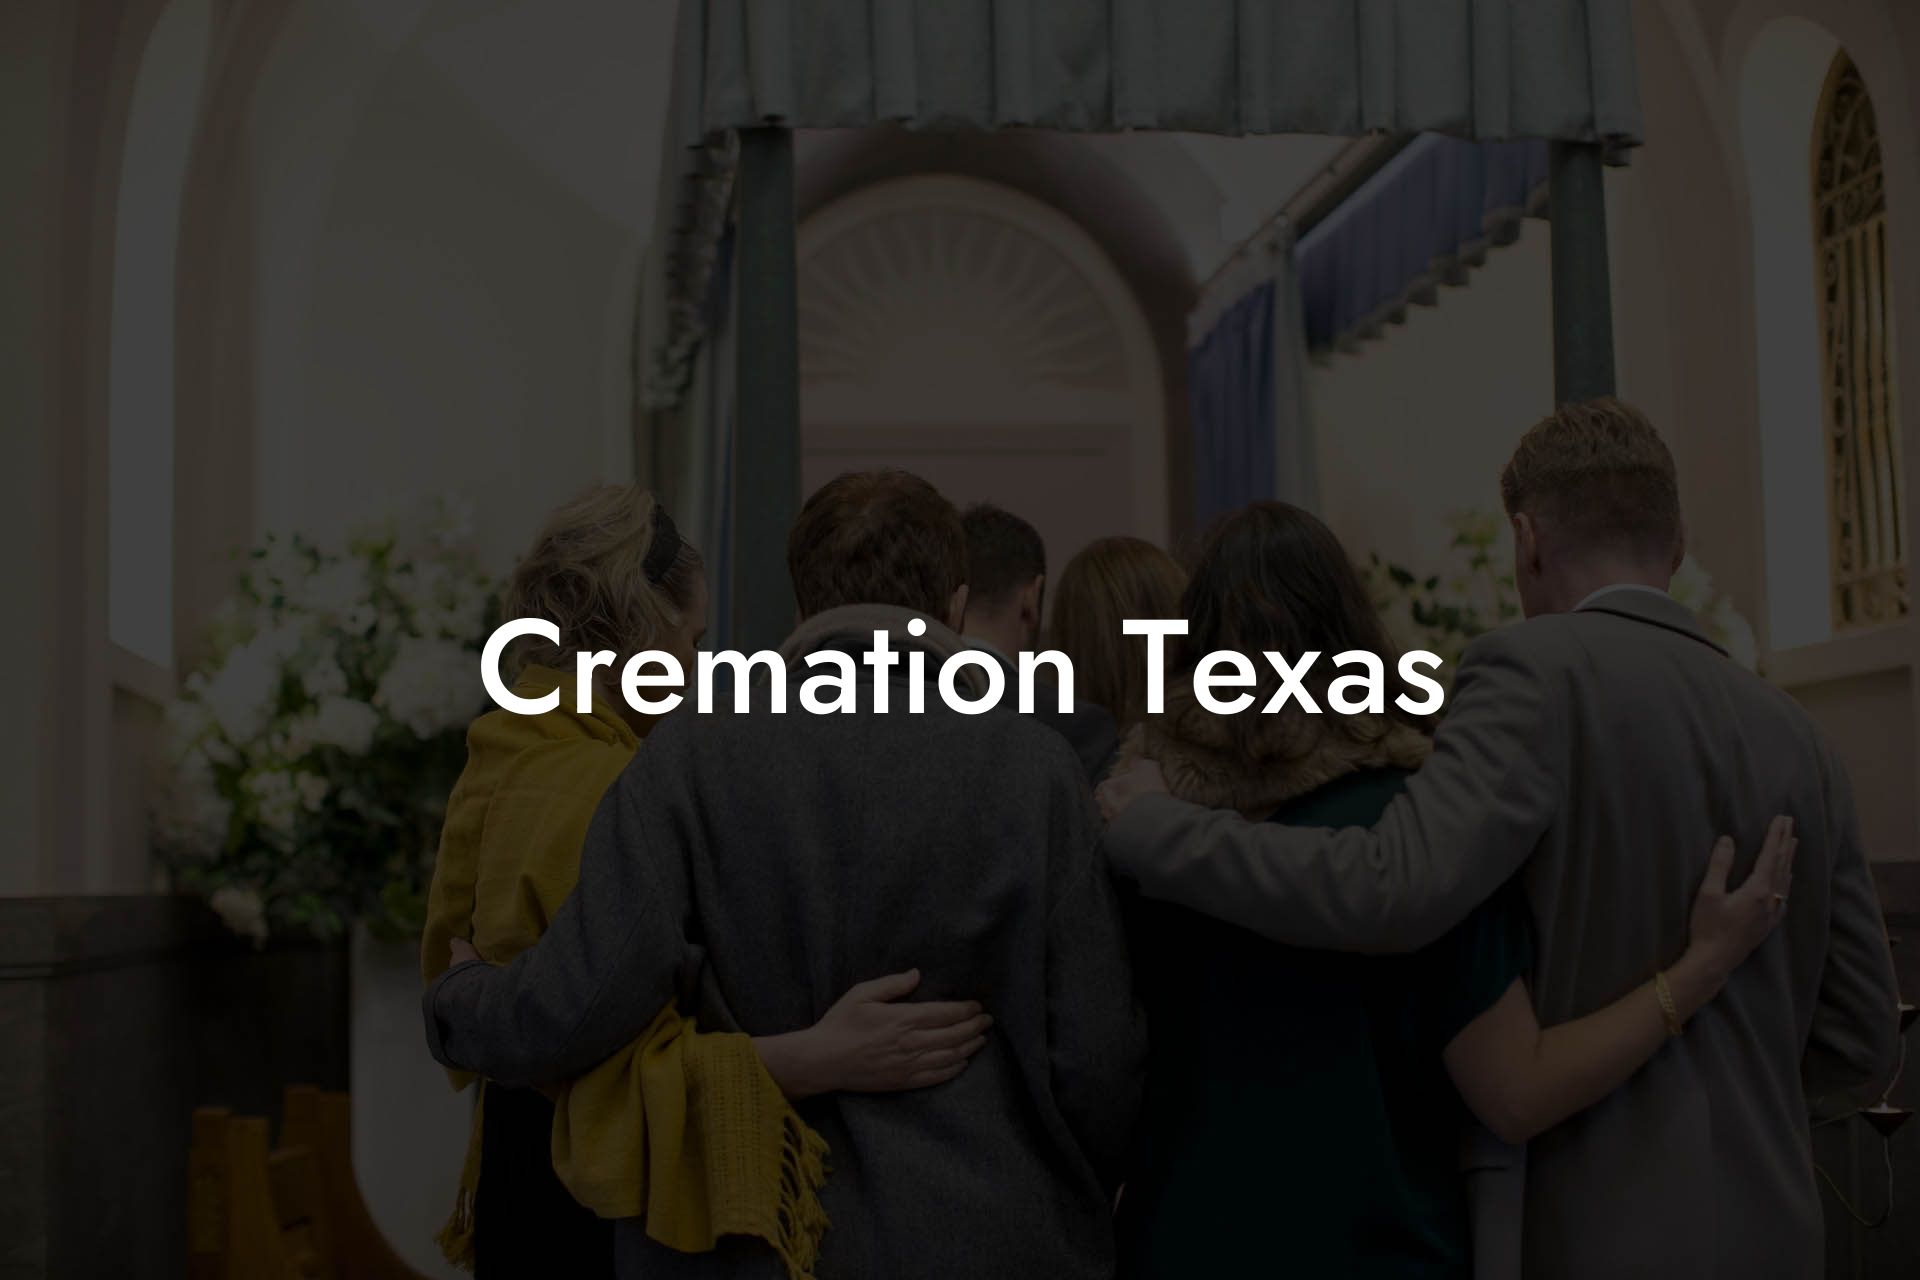 Cremation Texas